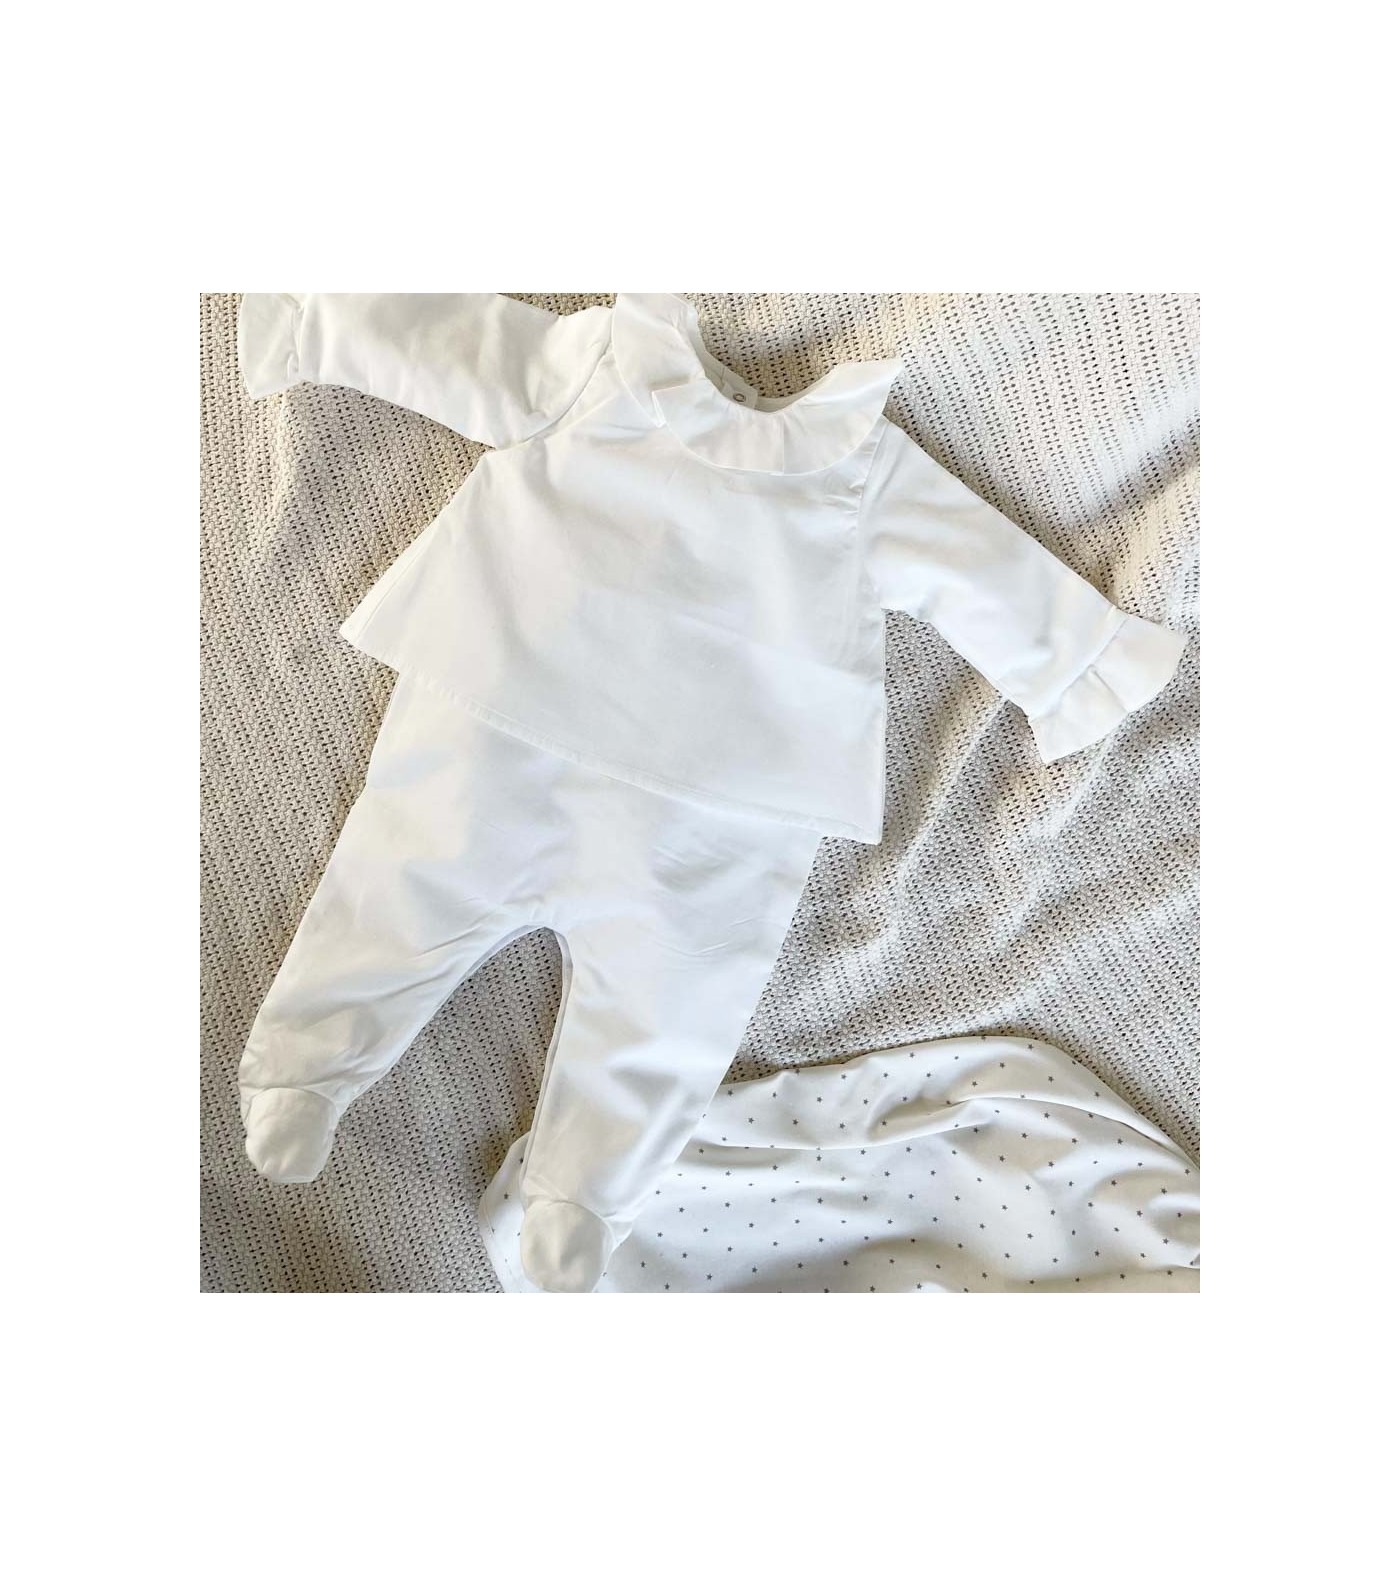 Pyjama bébé blanc 1 mois col motif floral Esmée - Made in Bébé